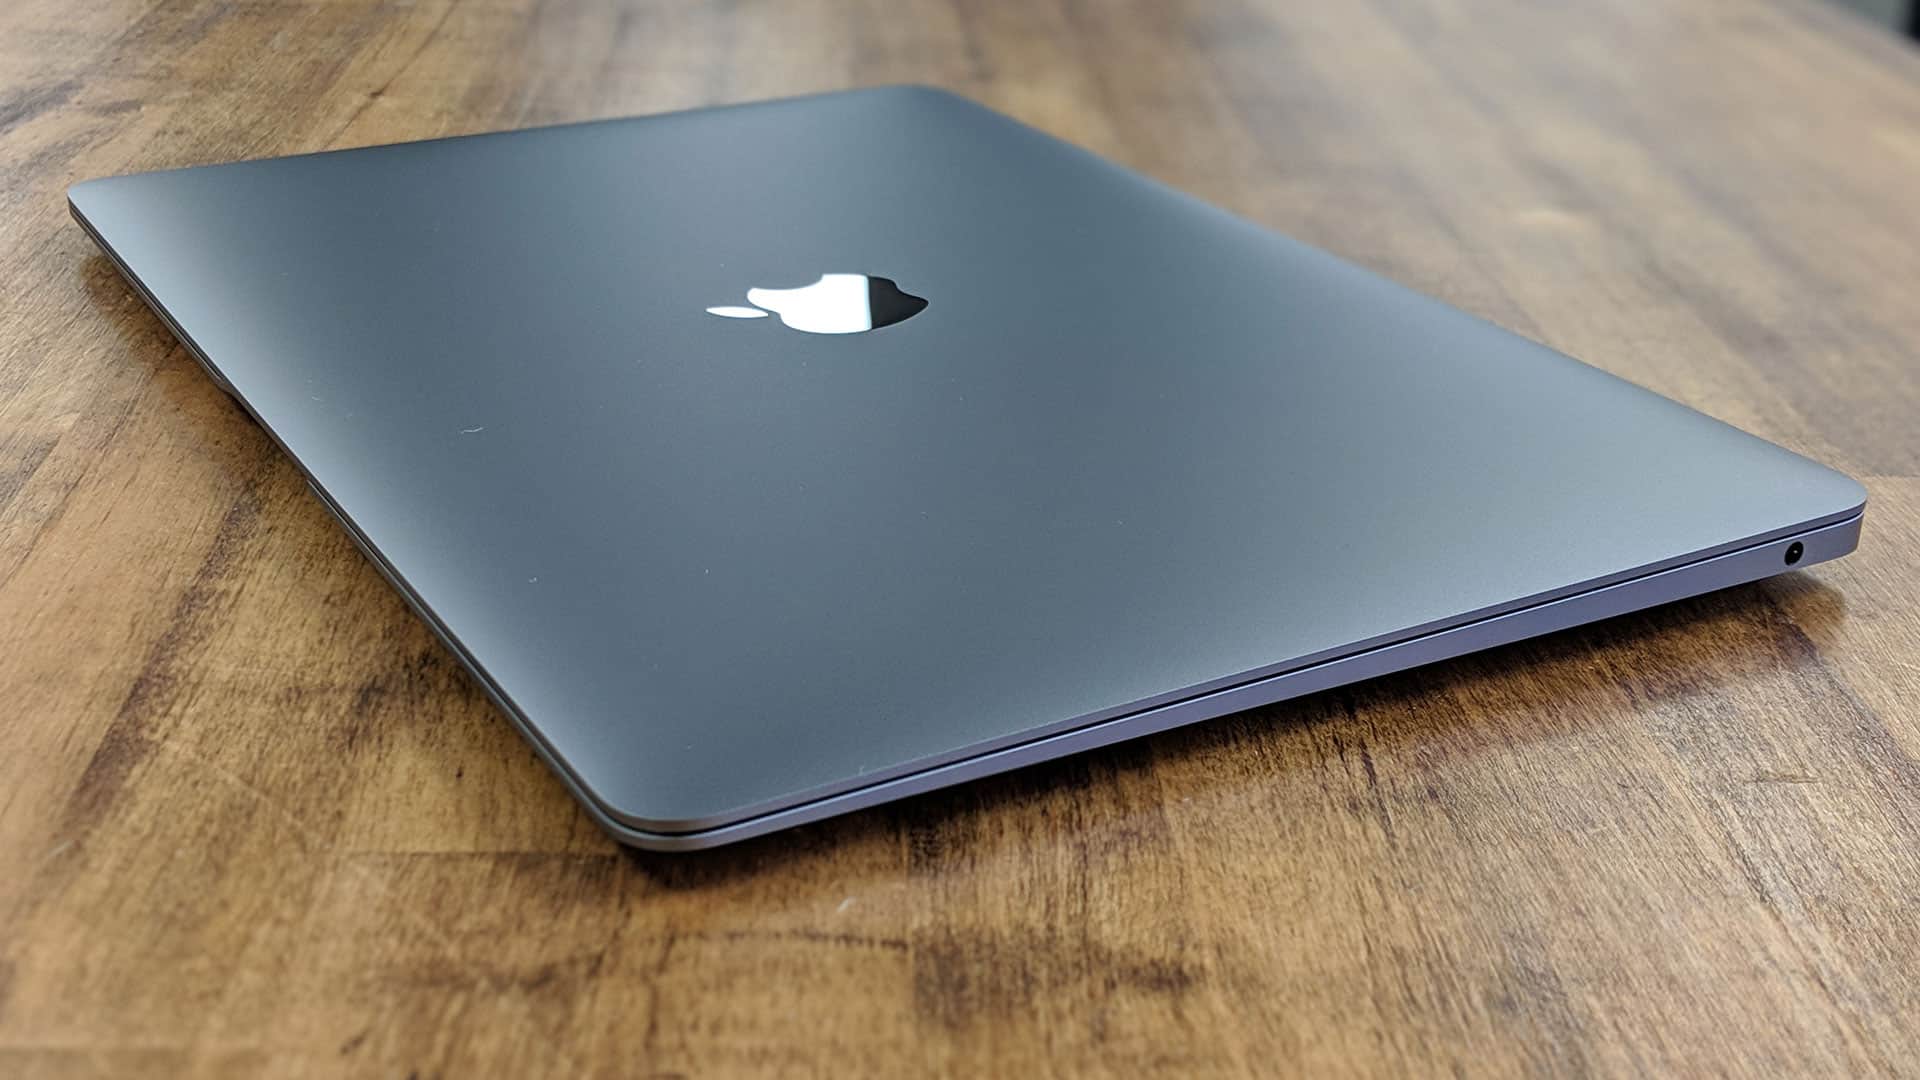 Apple Macbook Air (2018) Review - The Original Ultrabook is Back